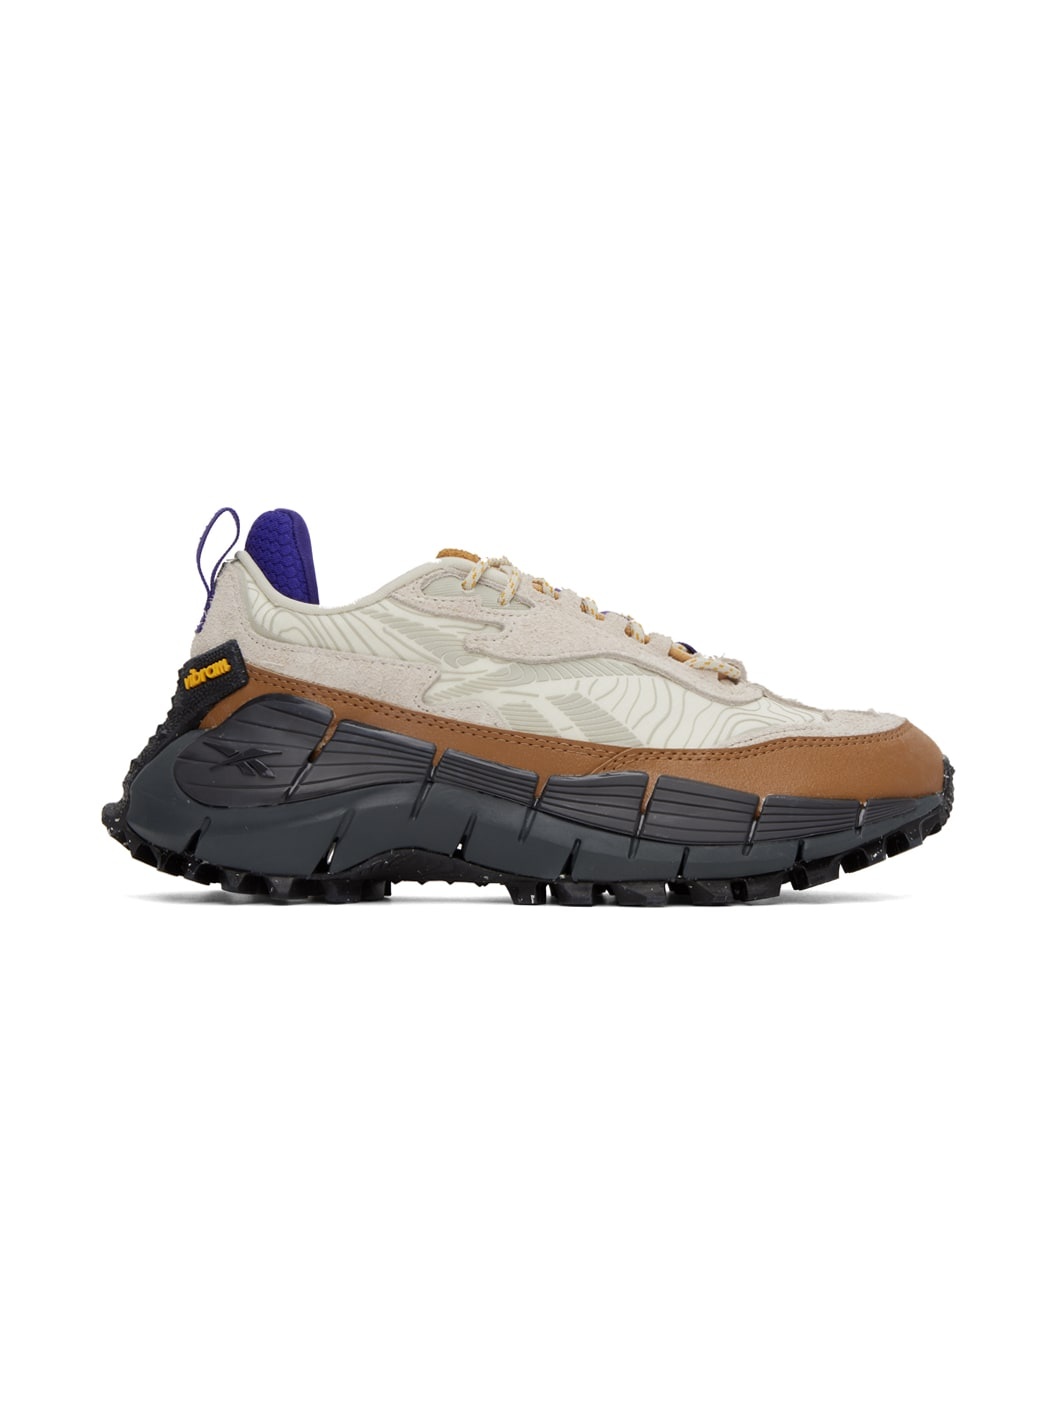 Off-White & Brown Zig Kinetica 2.5 Edge Sneakers - 1